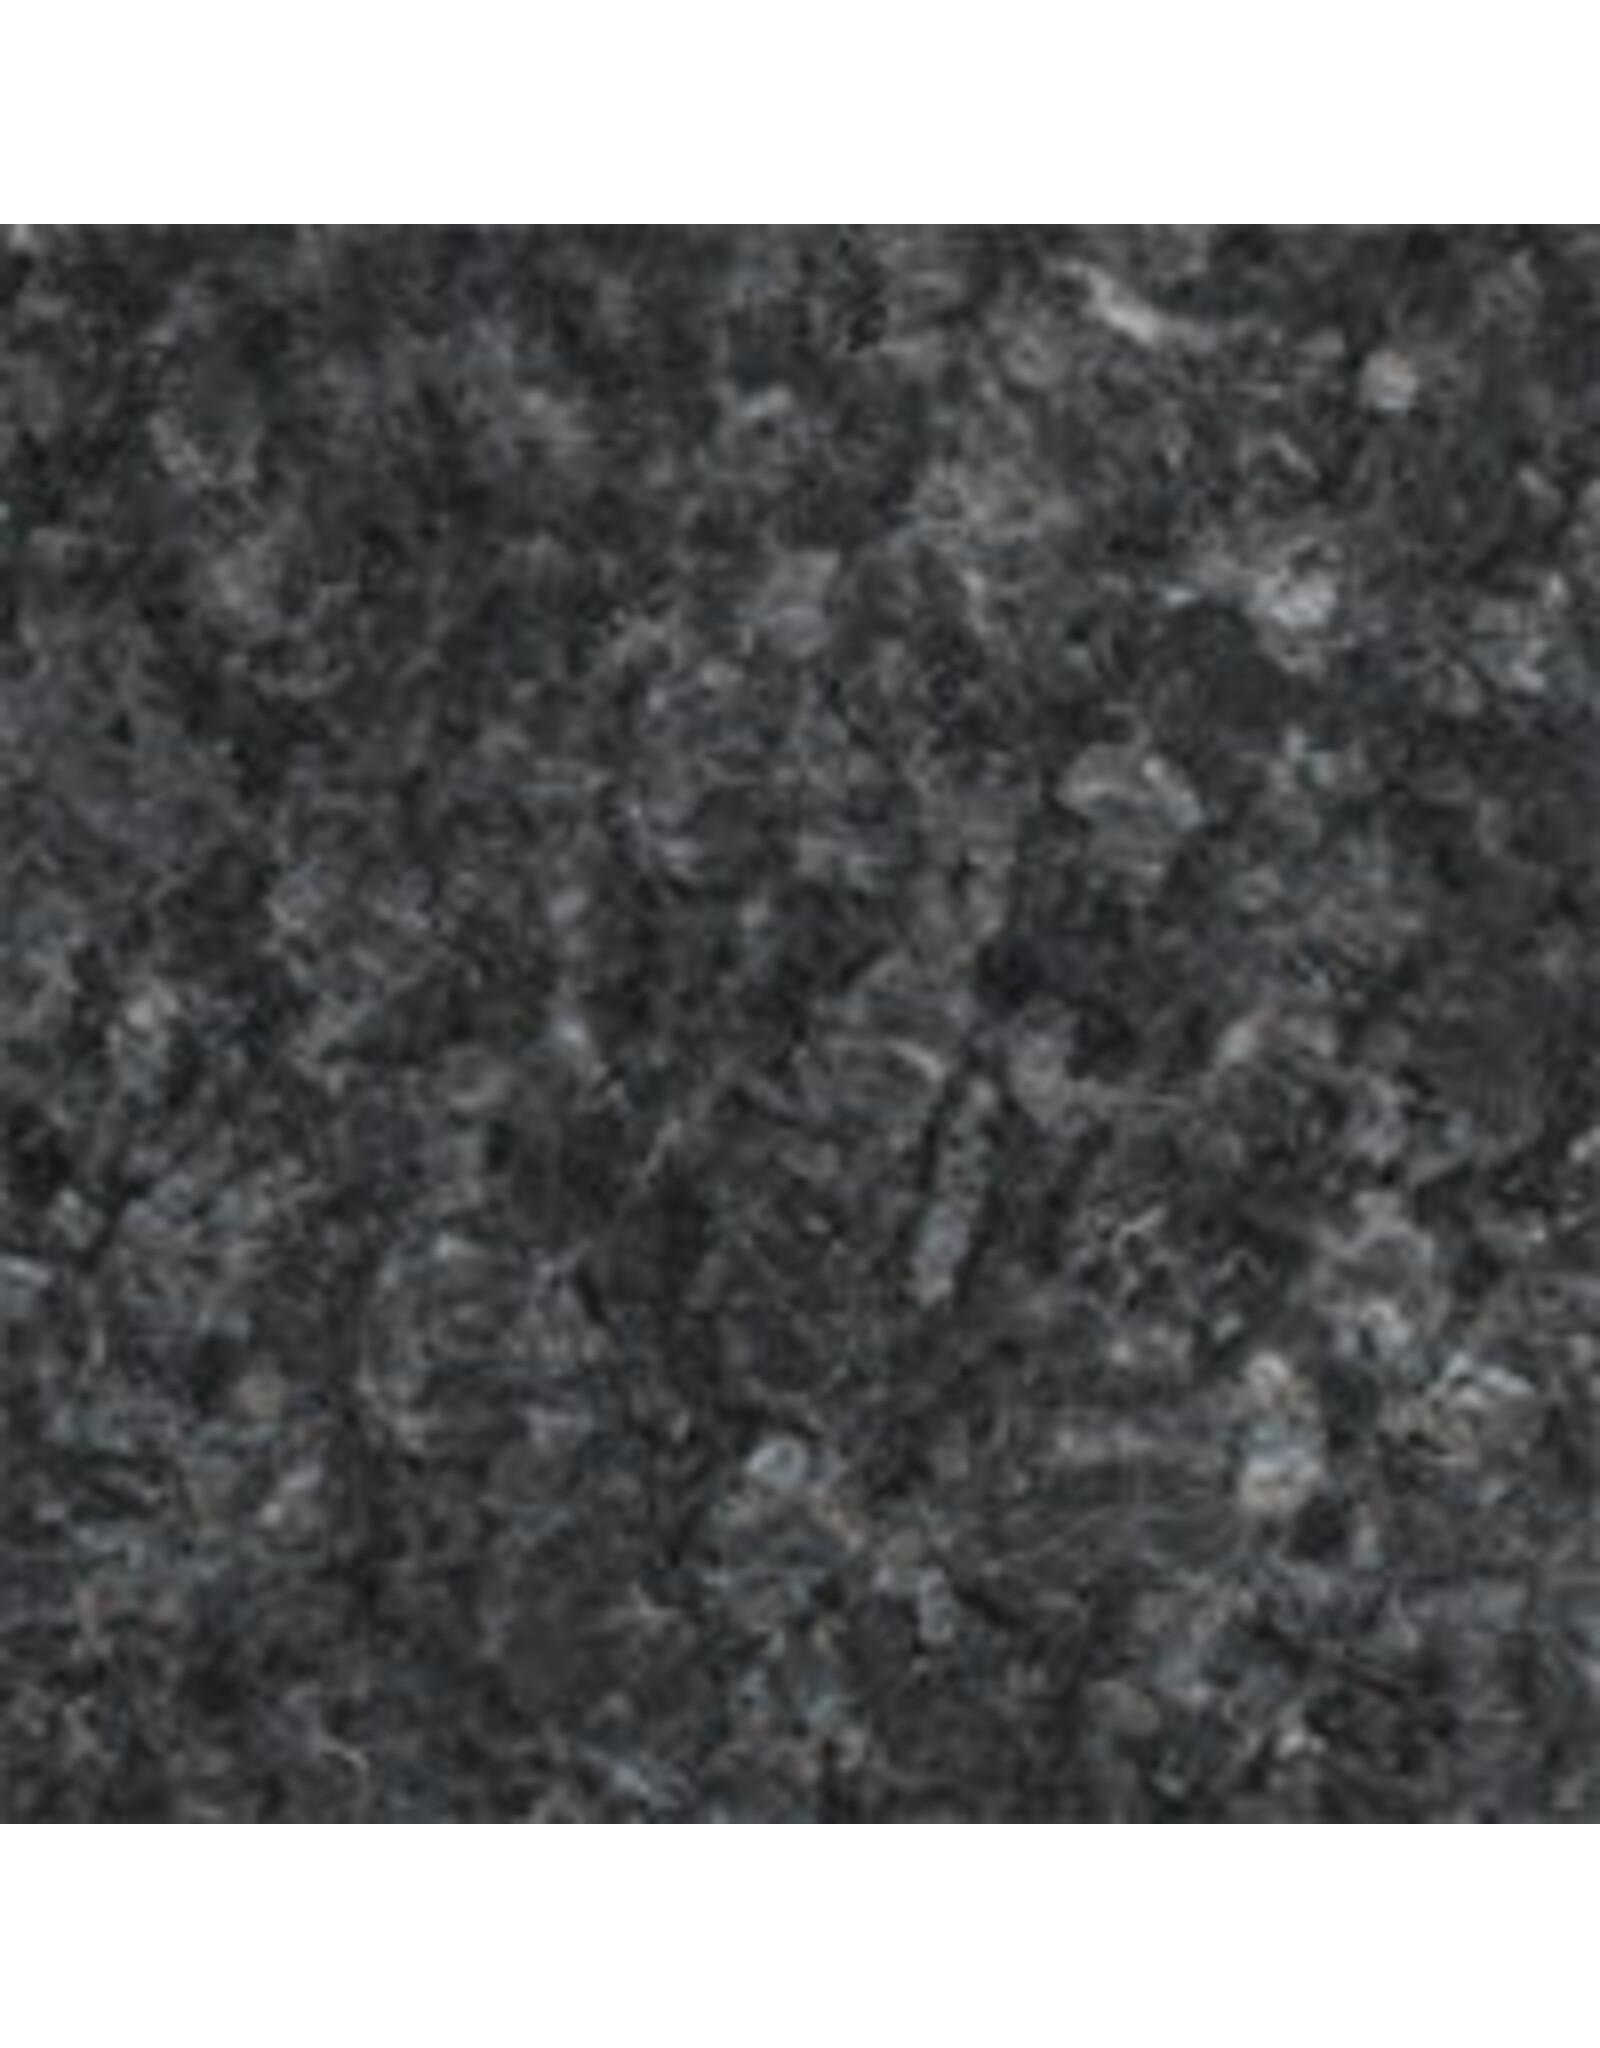 HKC Laminate Countertop 6280-58 Midnight Stone 25.25x120 (10ft)